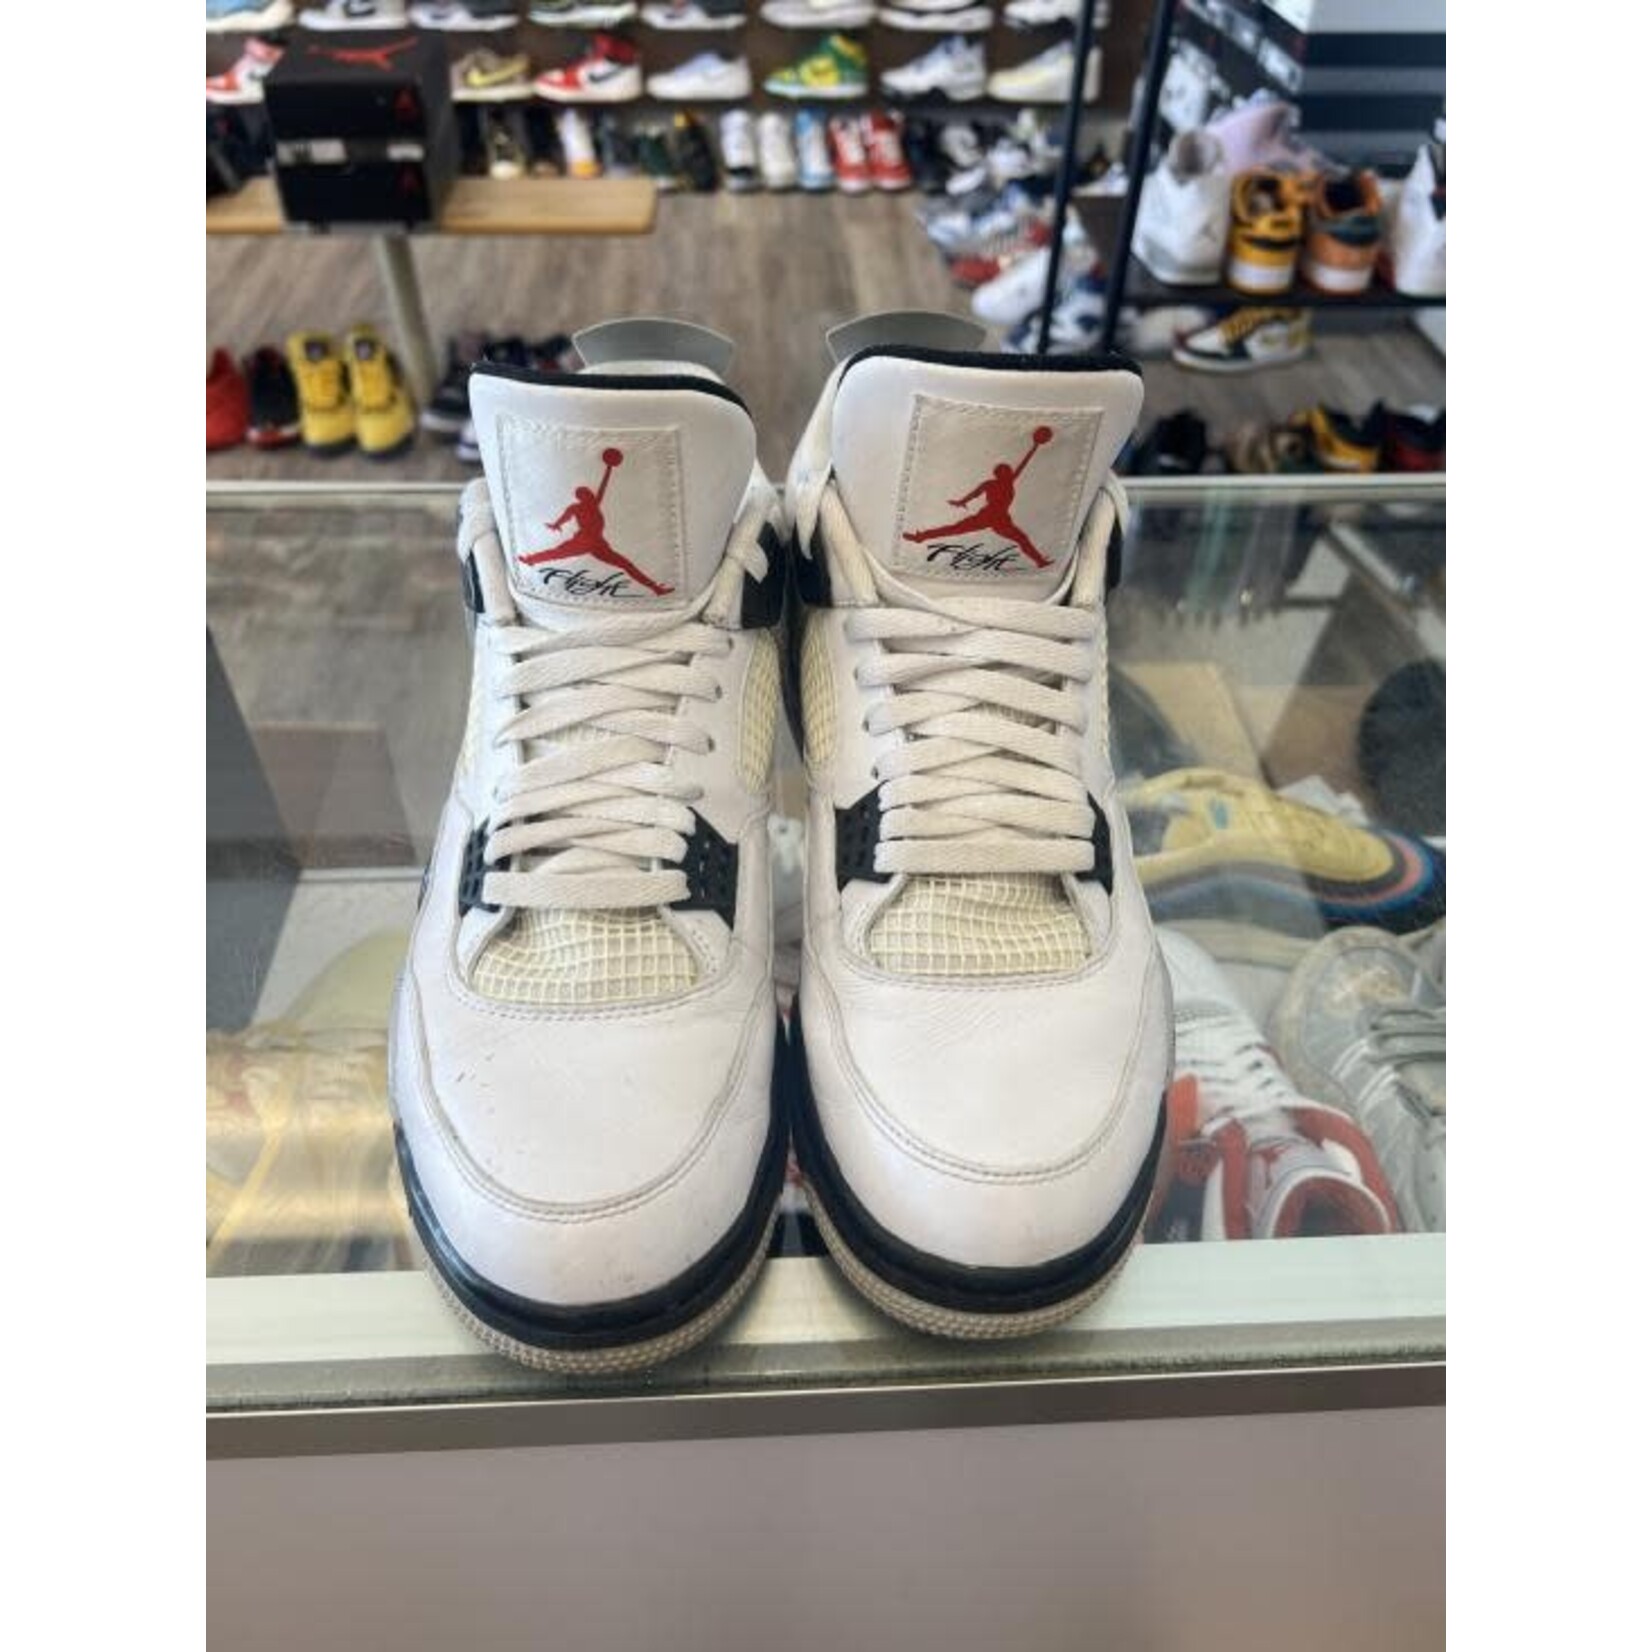 Jordan Jordan 4 Retro White Cement (2016) Size 11, PREOWNED NO BOX